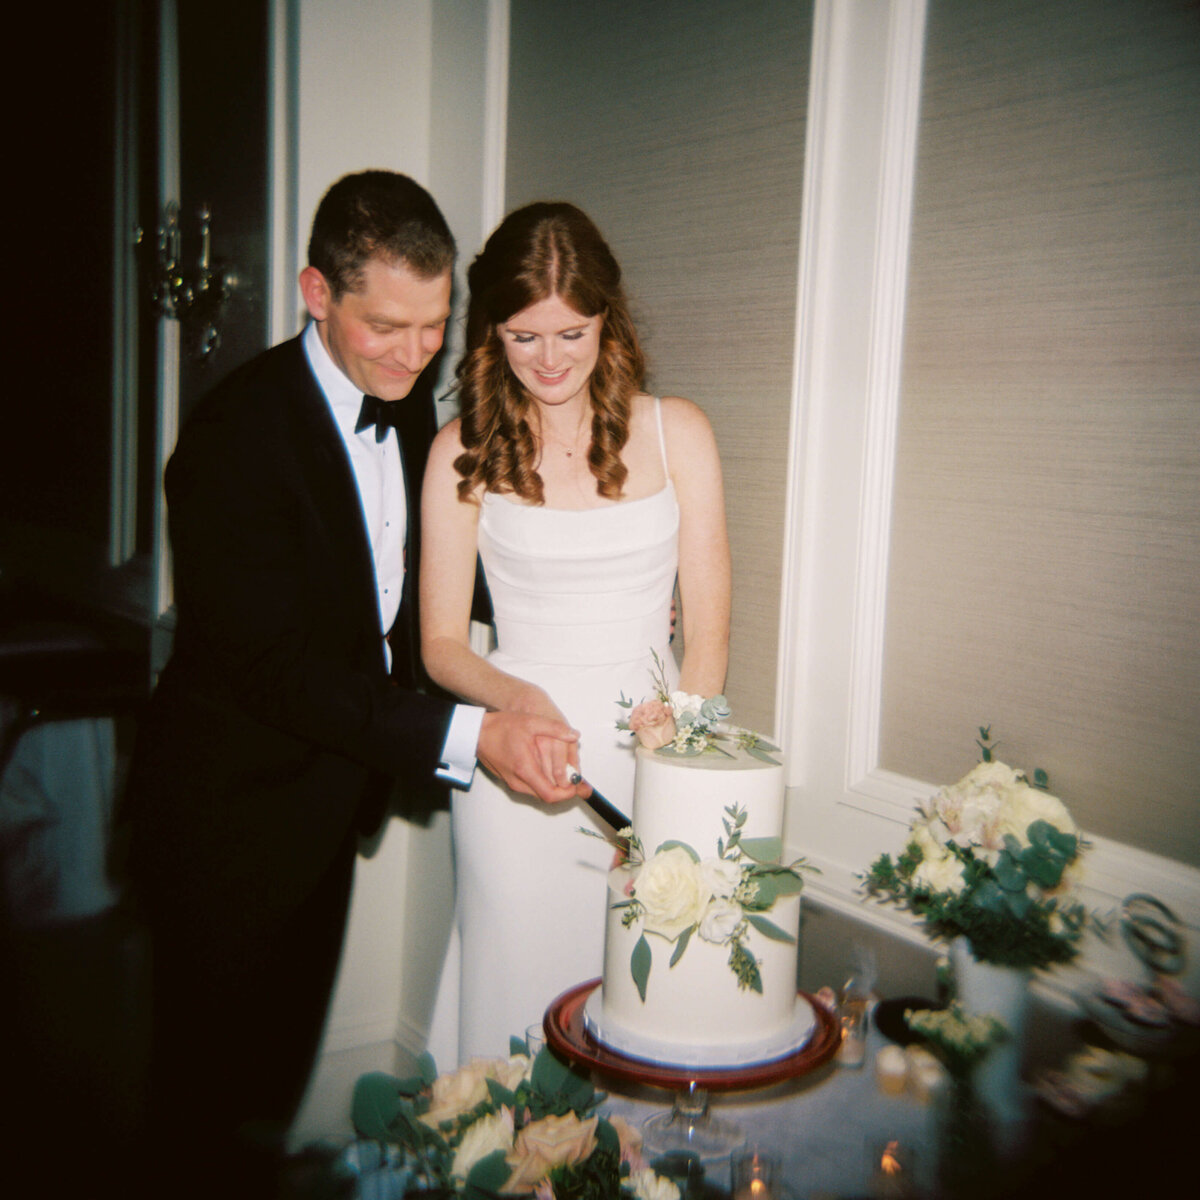 Bride and groom cutting wedding cake at  Lord Nelson Hotel Wedding, in Halifax, Nova Scotia